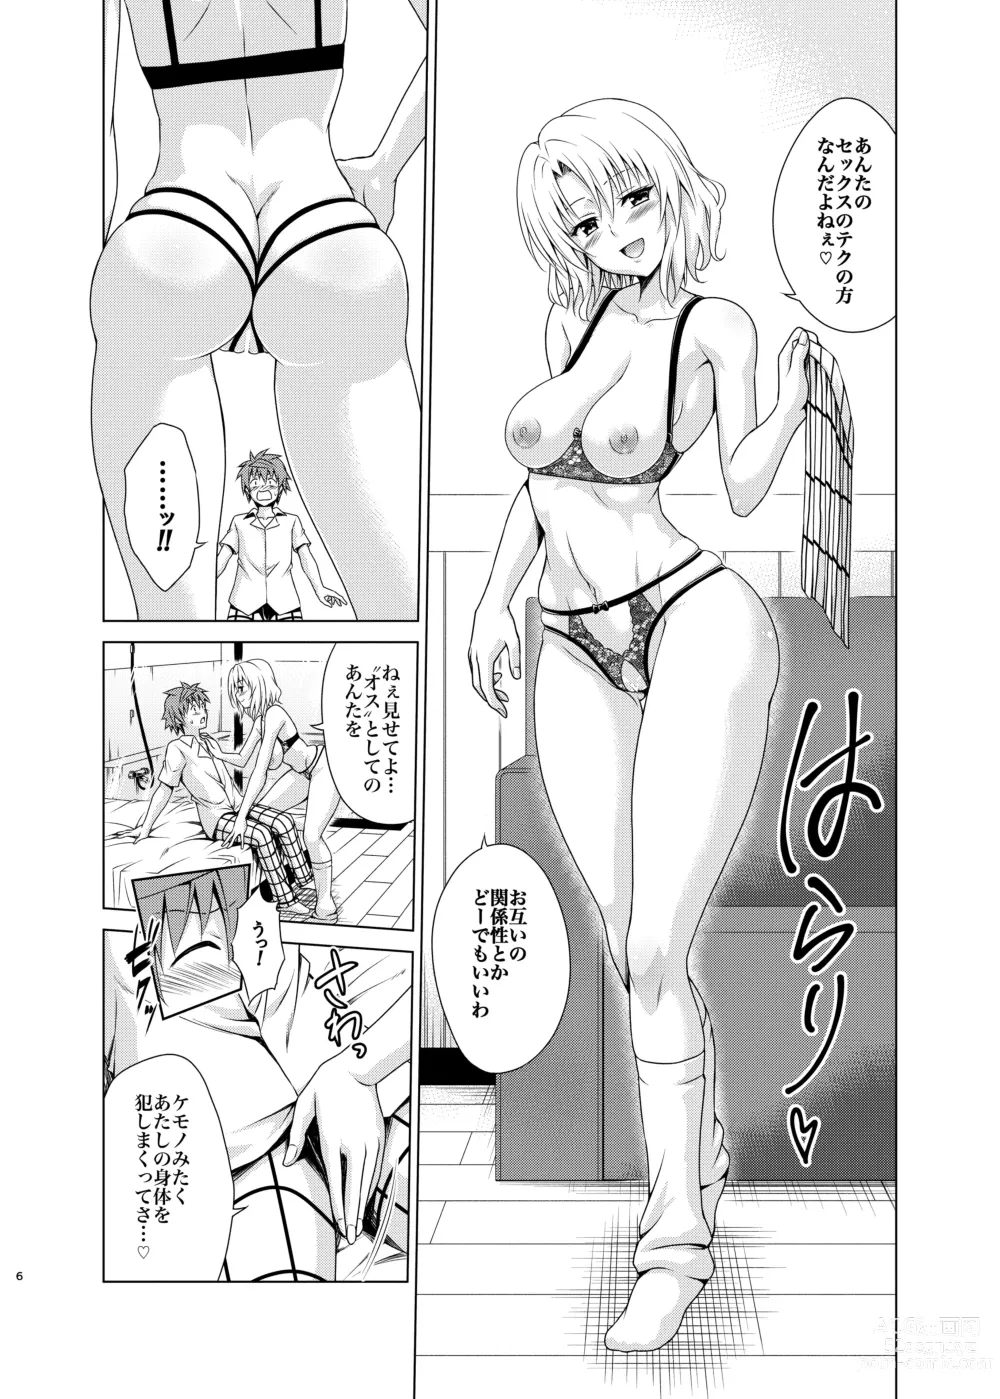 Page 5 of doujinshi Mezase! Rakuen Keikaku RX vol. 3